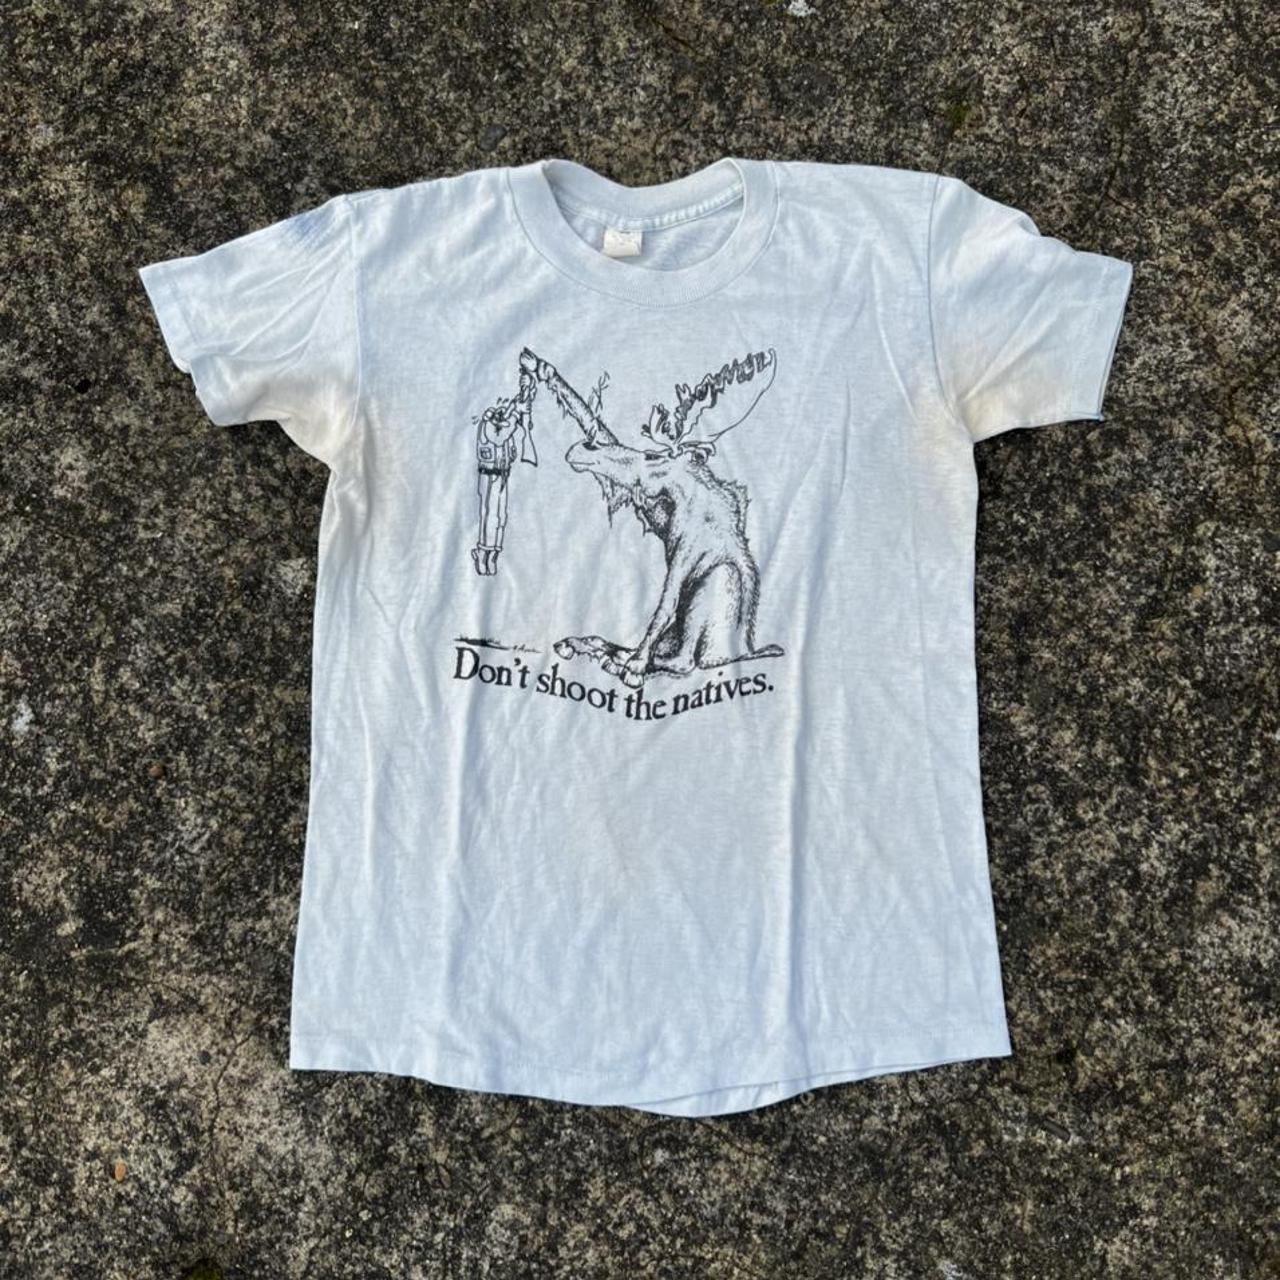 17London Men's T-shirt